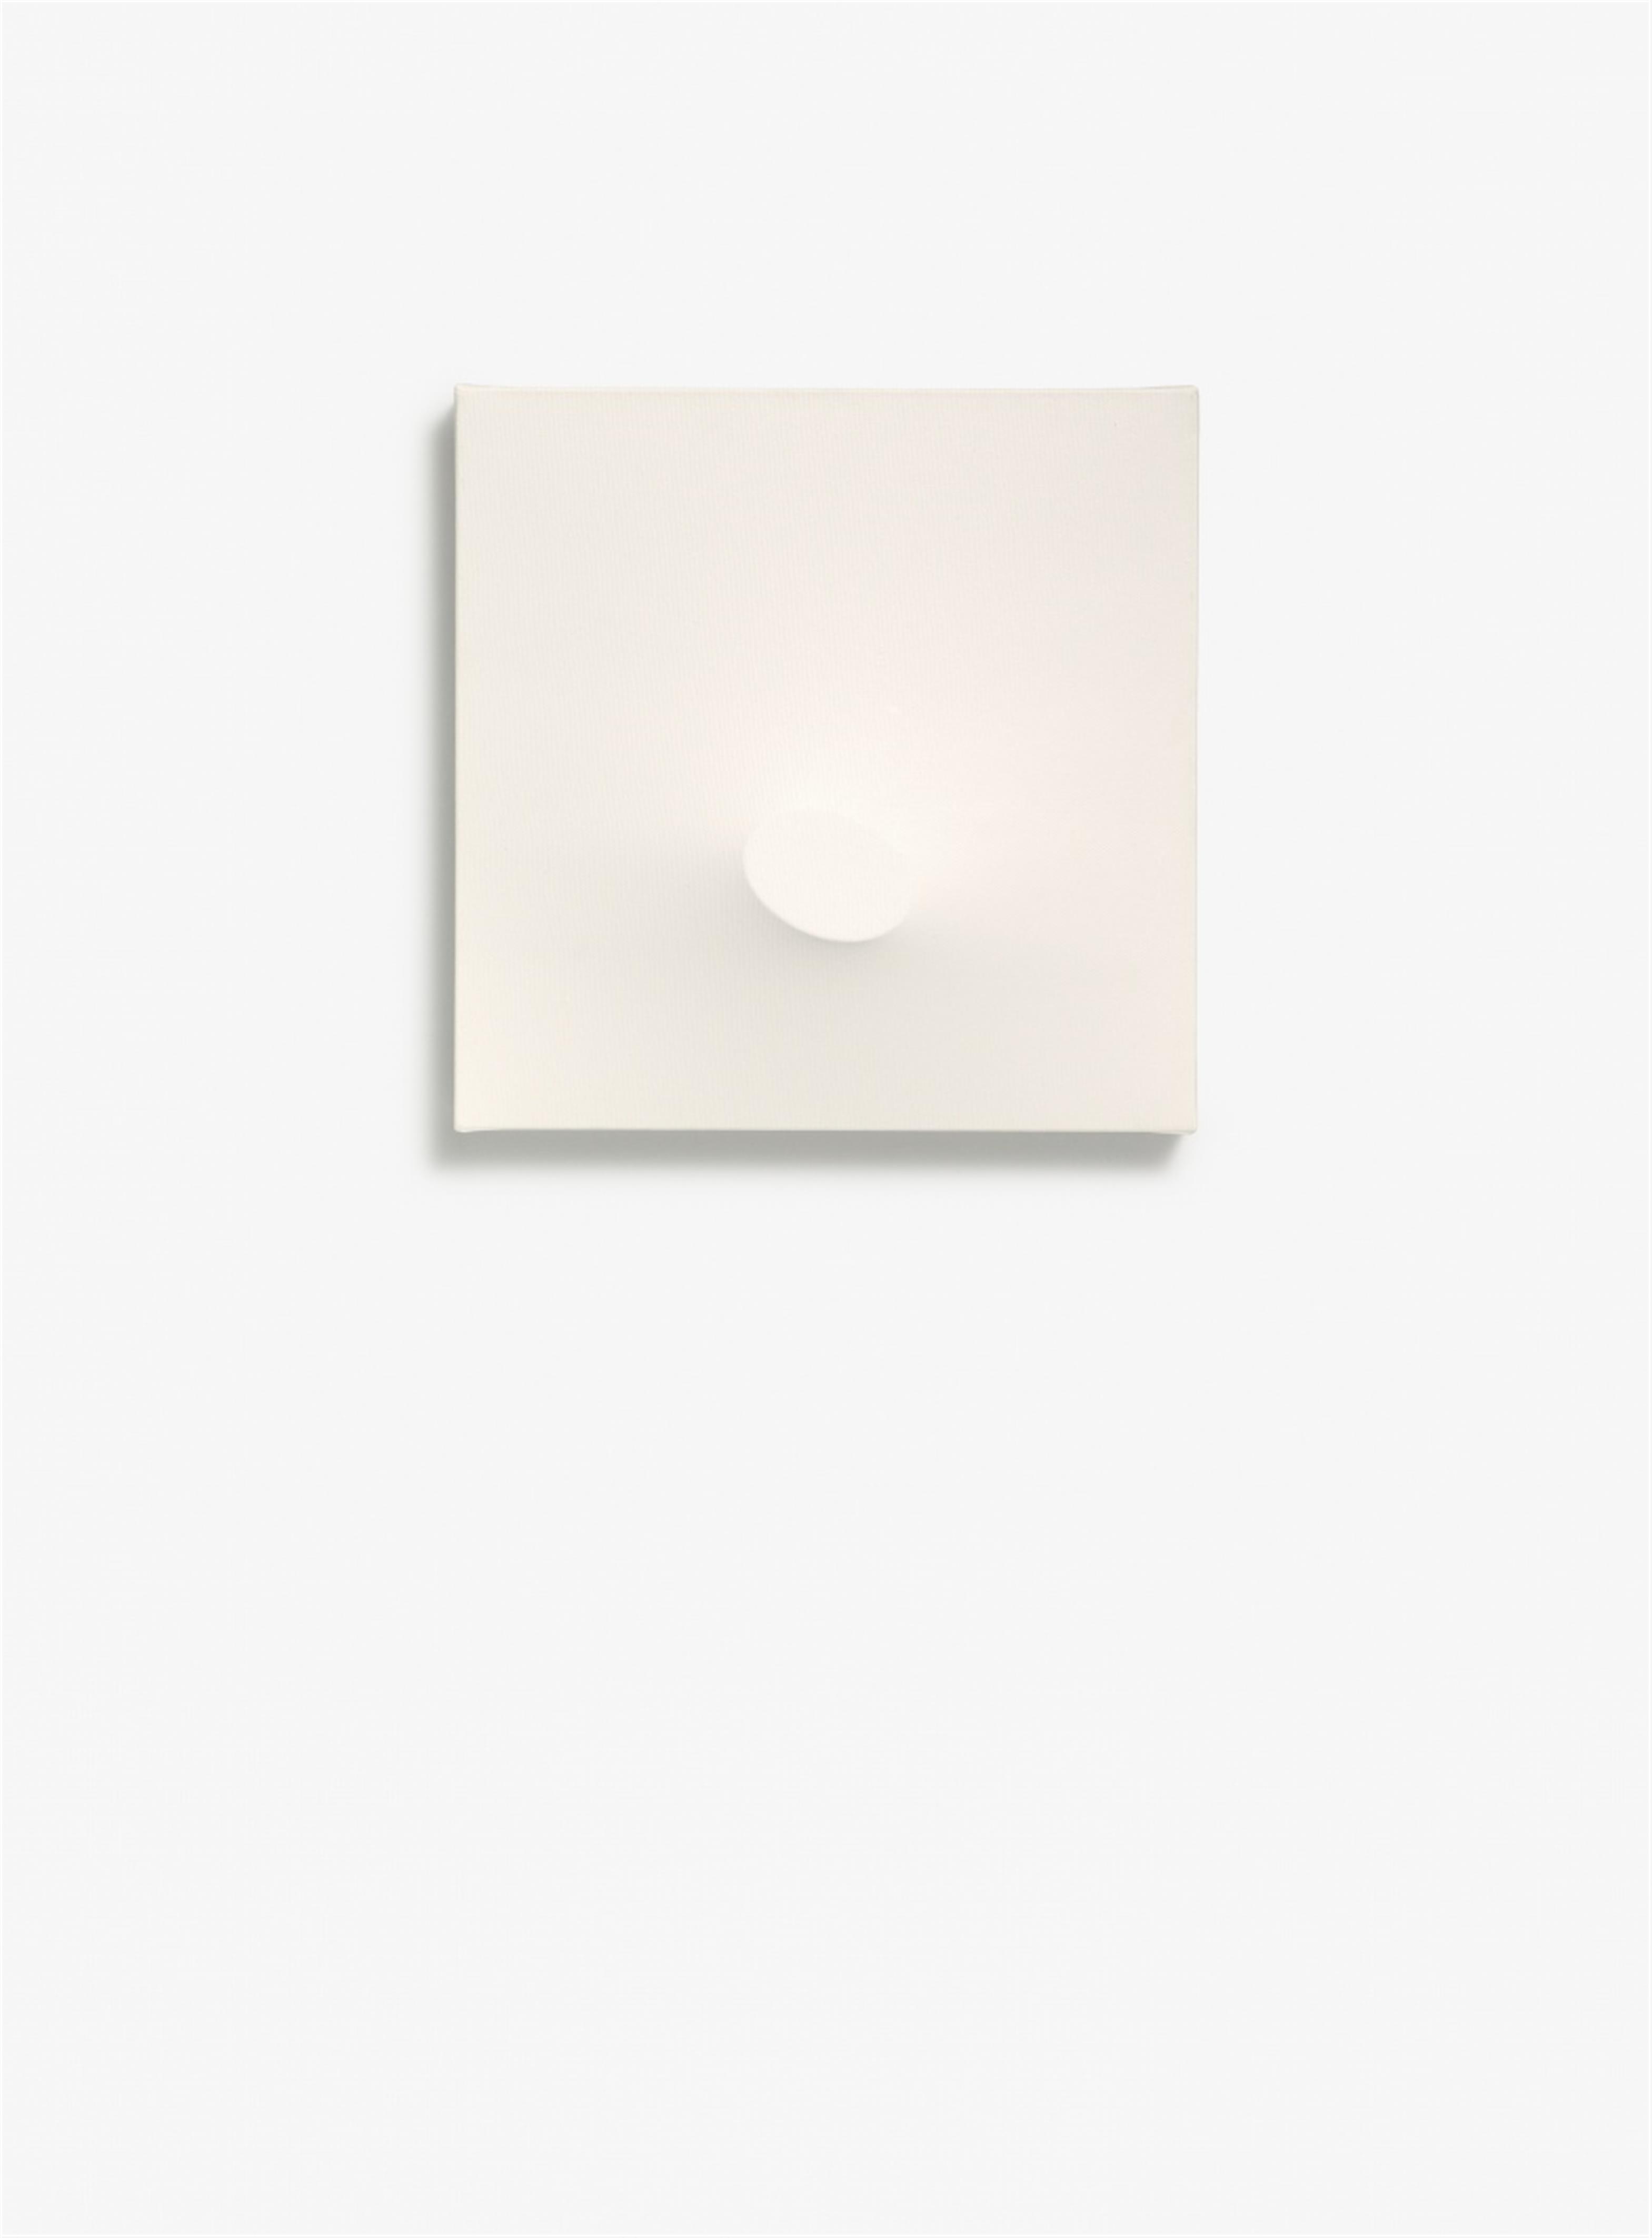 Turi Simeti - Un ovale bianco - image-1